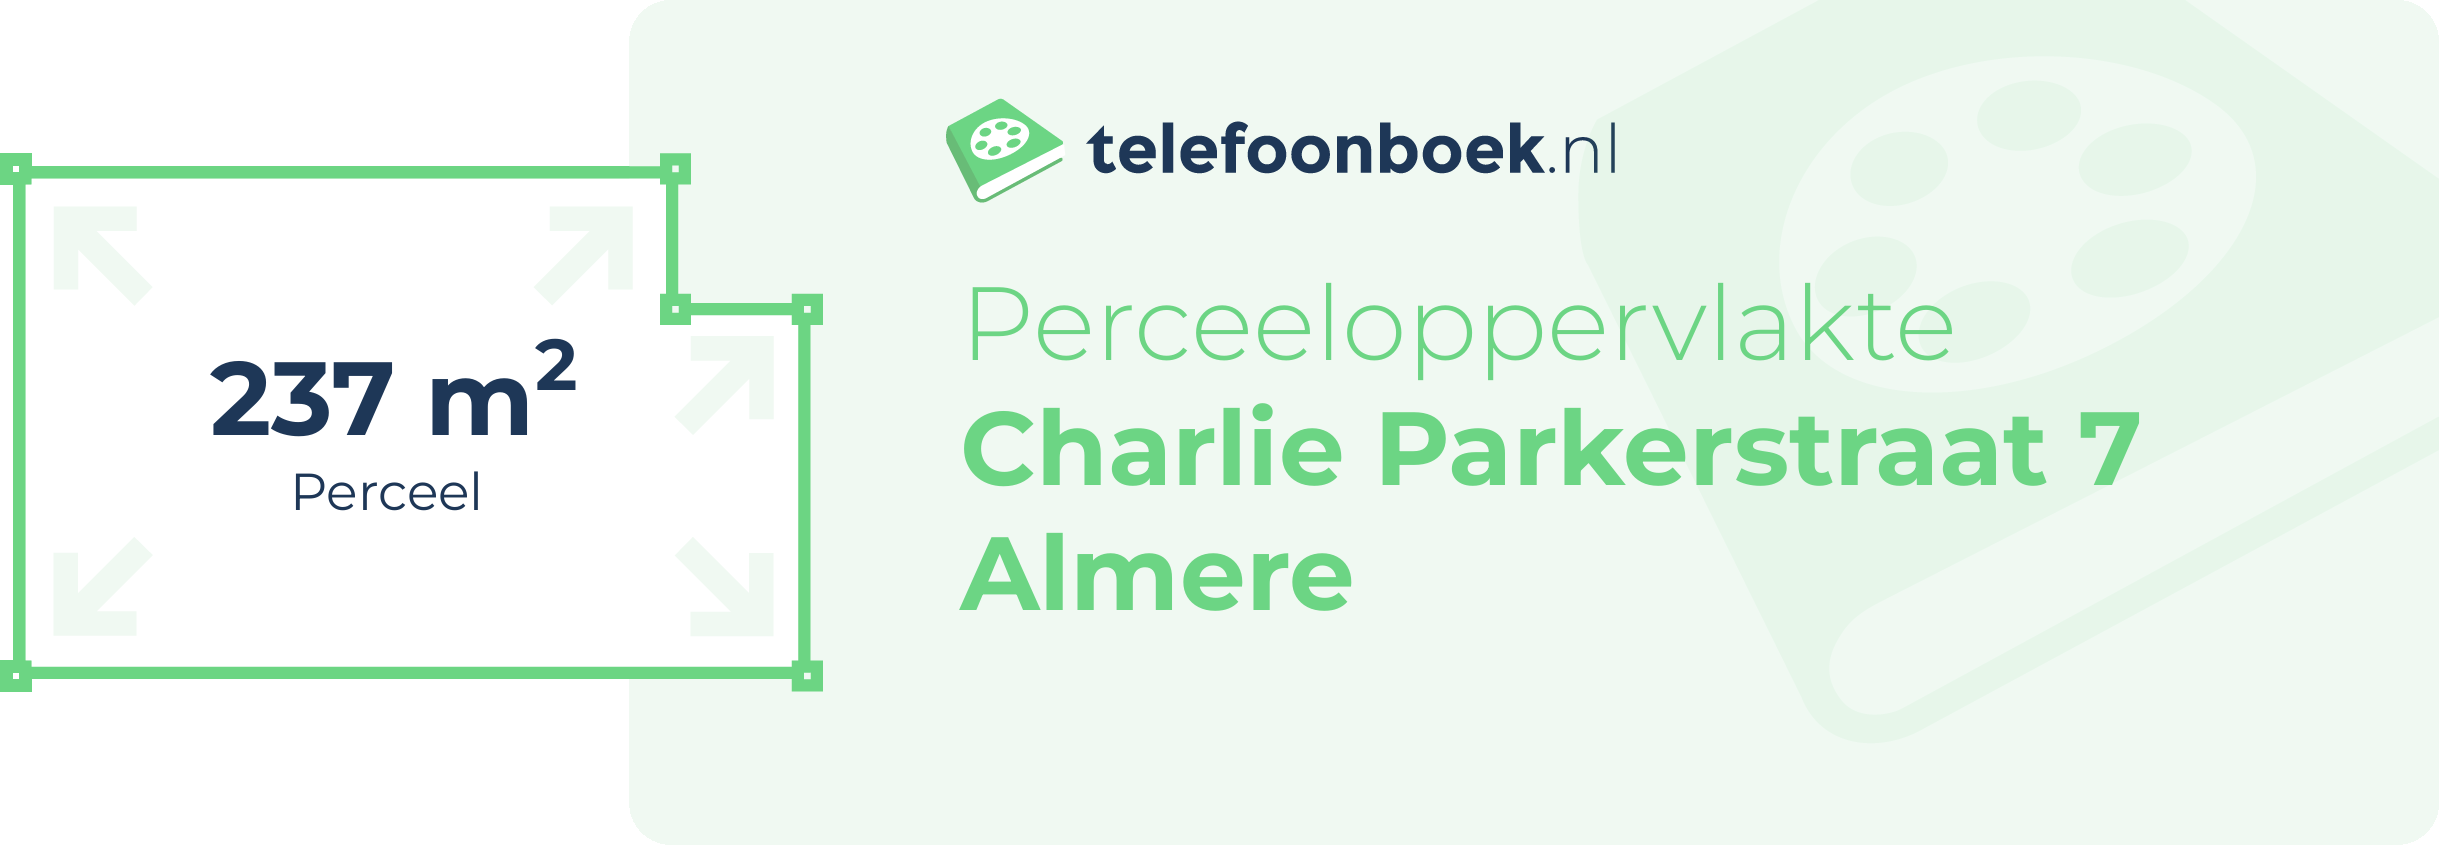 Perceeloppervlakte Charlie Parkerstraat 7 Almere